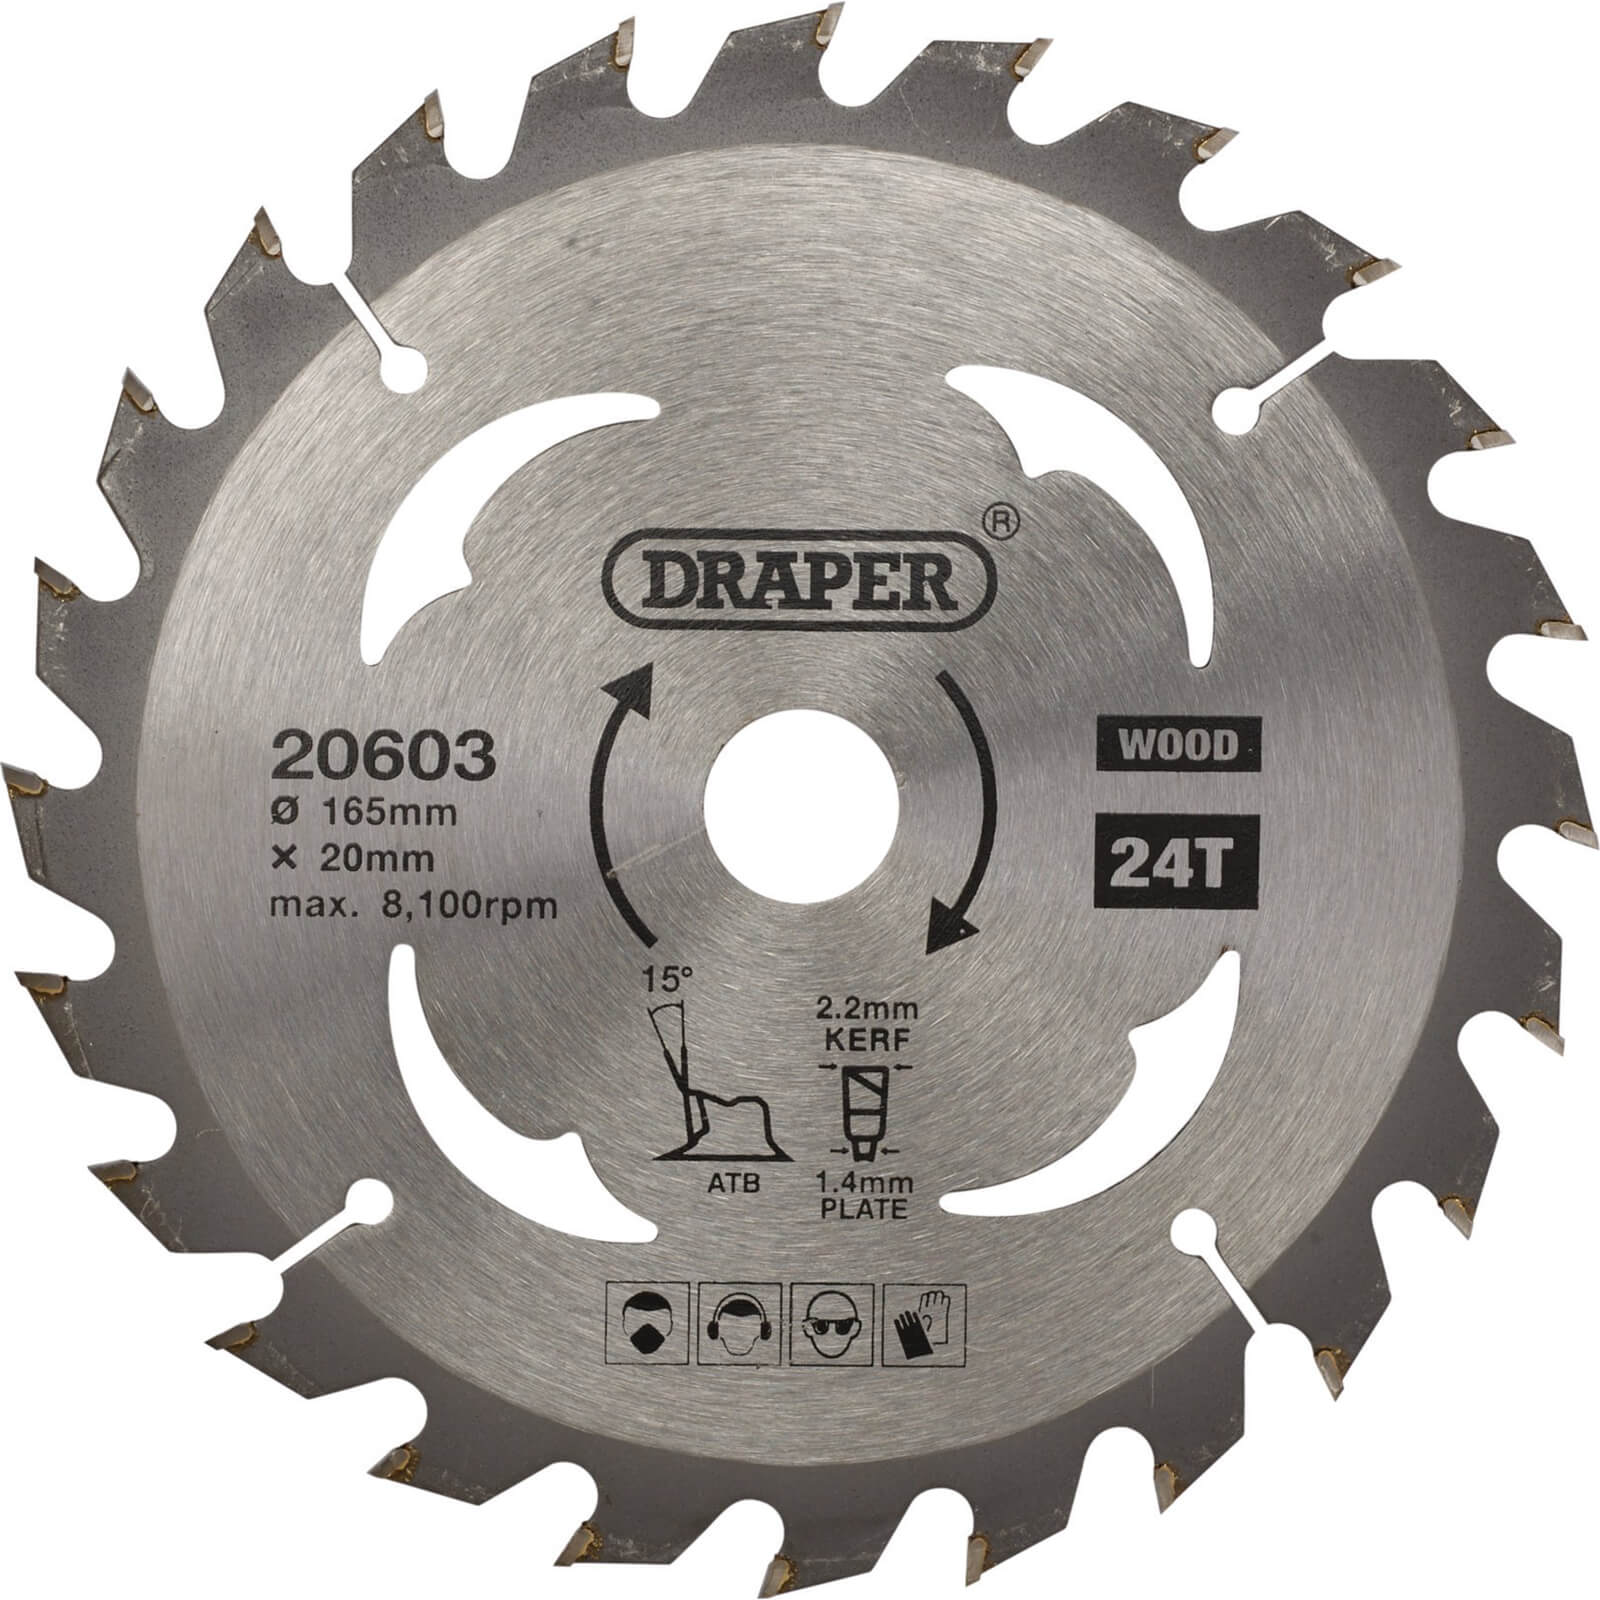 Image of Draper TCT Wood Cutting Circular Saw Blade 165mm 24T 20mm